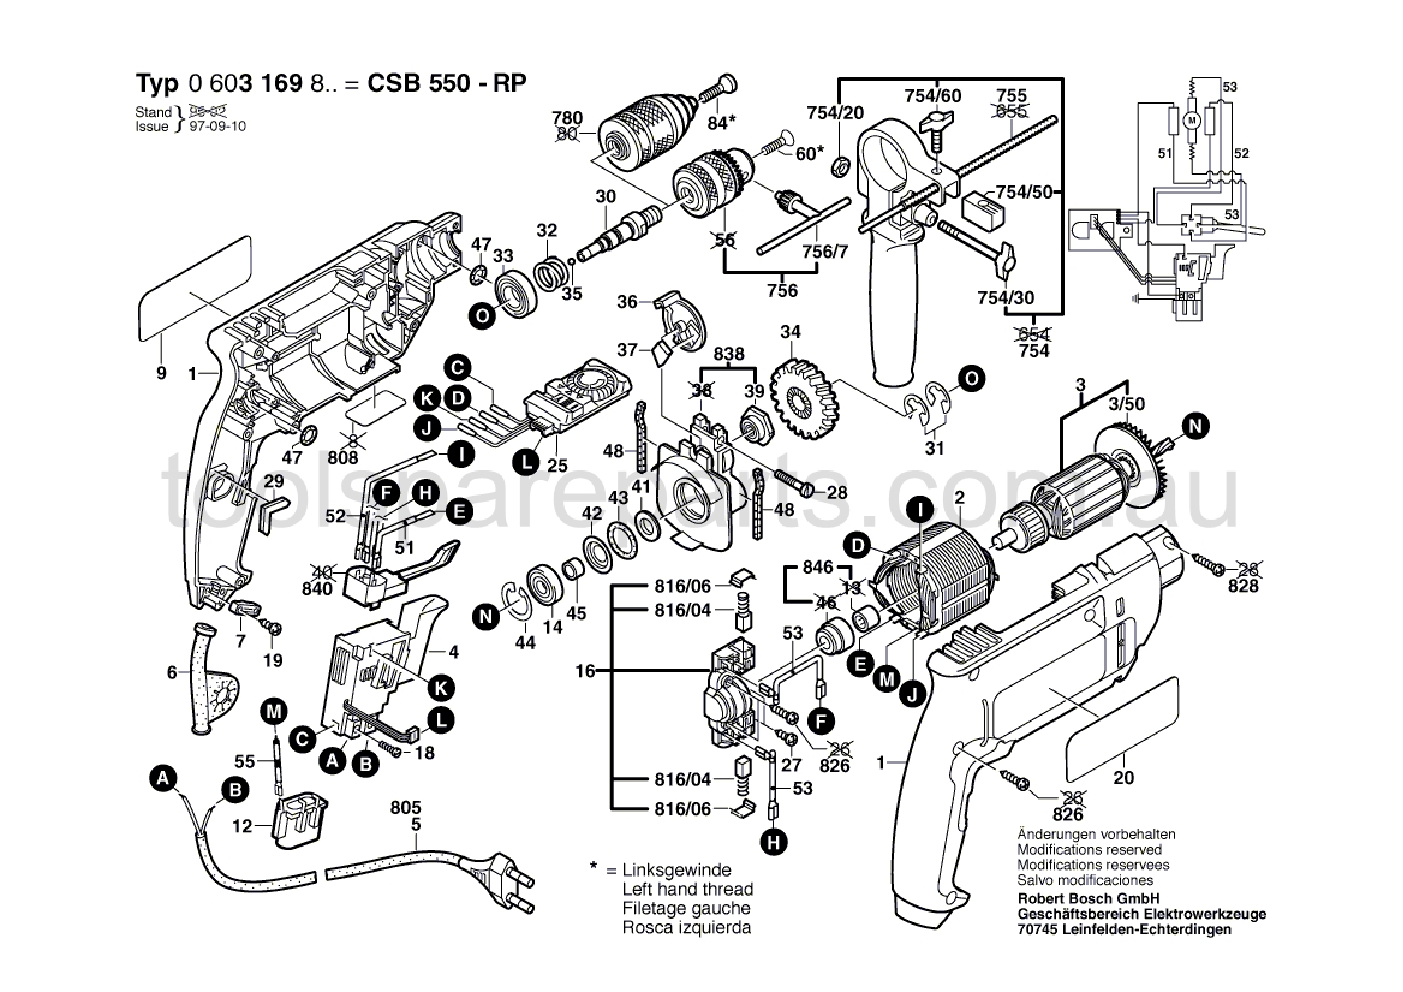 Bosch CSB 550 RP 0603169873  Diagram 1